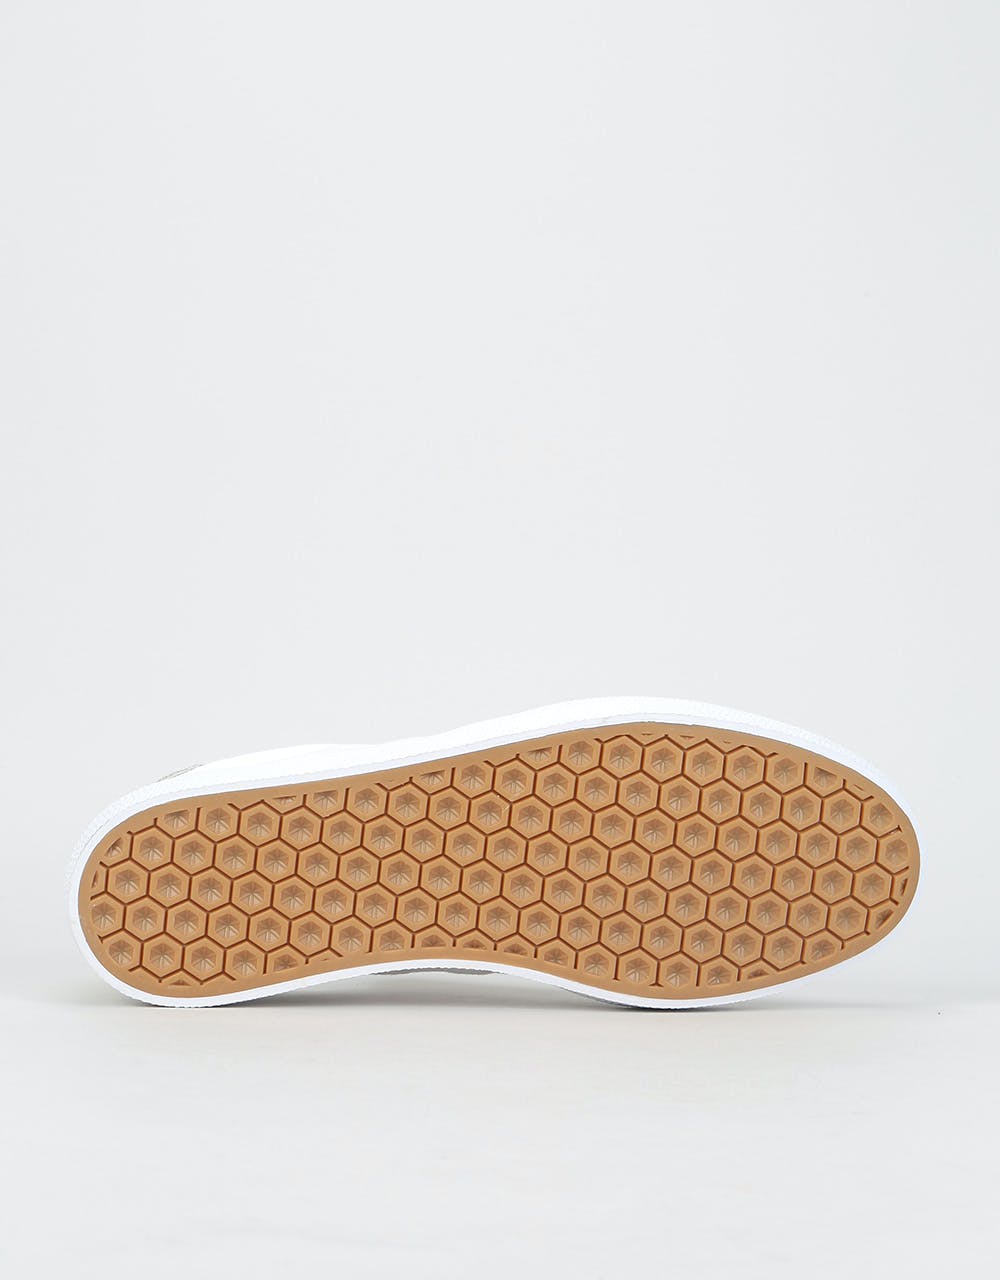 Adidas 3MC Skate Shoes - White/Clear Brown/Gold Metallic